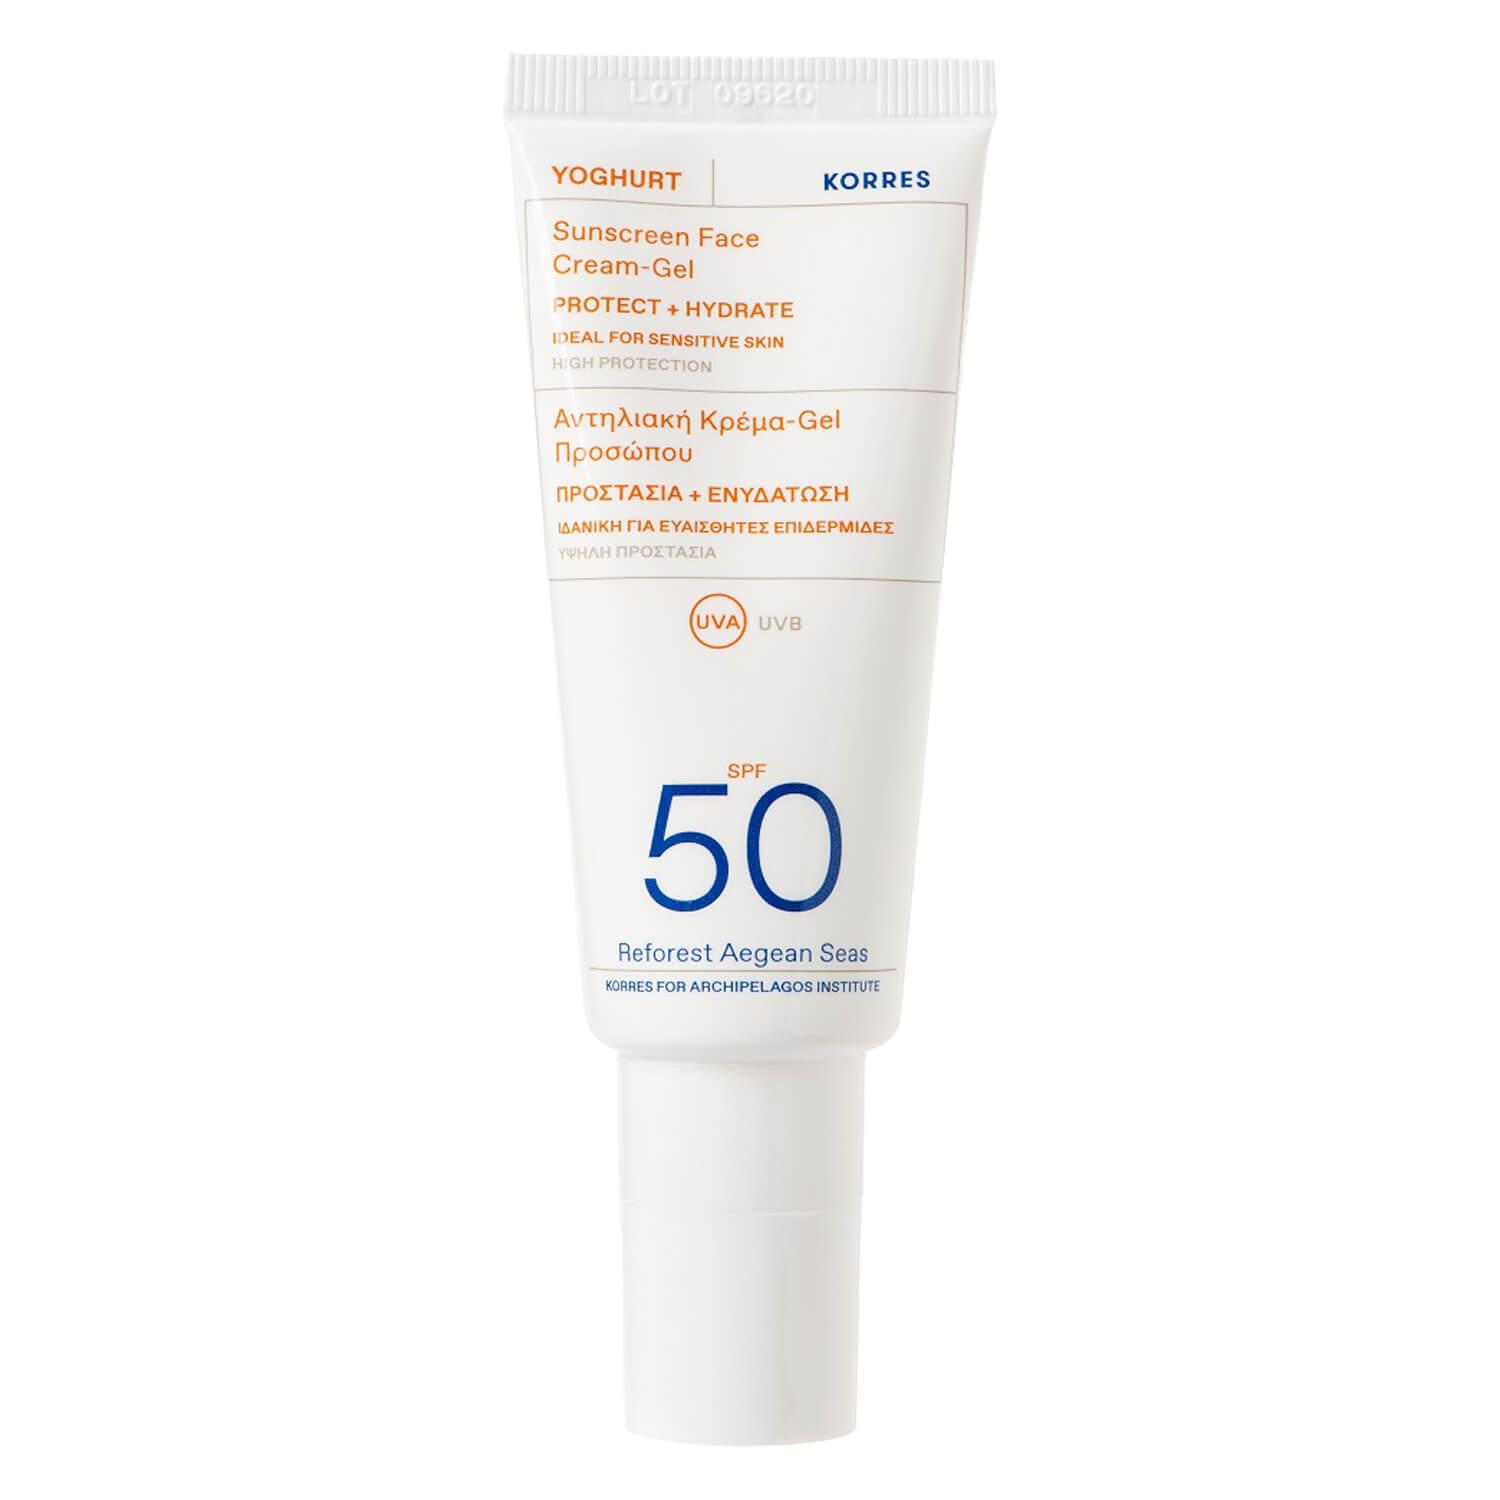 Korres Care - Yoghurt Sunscreen Face Cream-Gel SPF50